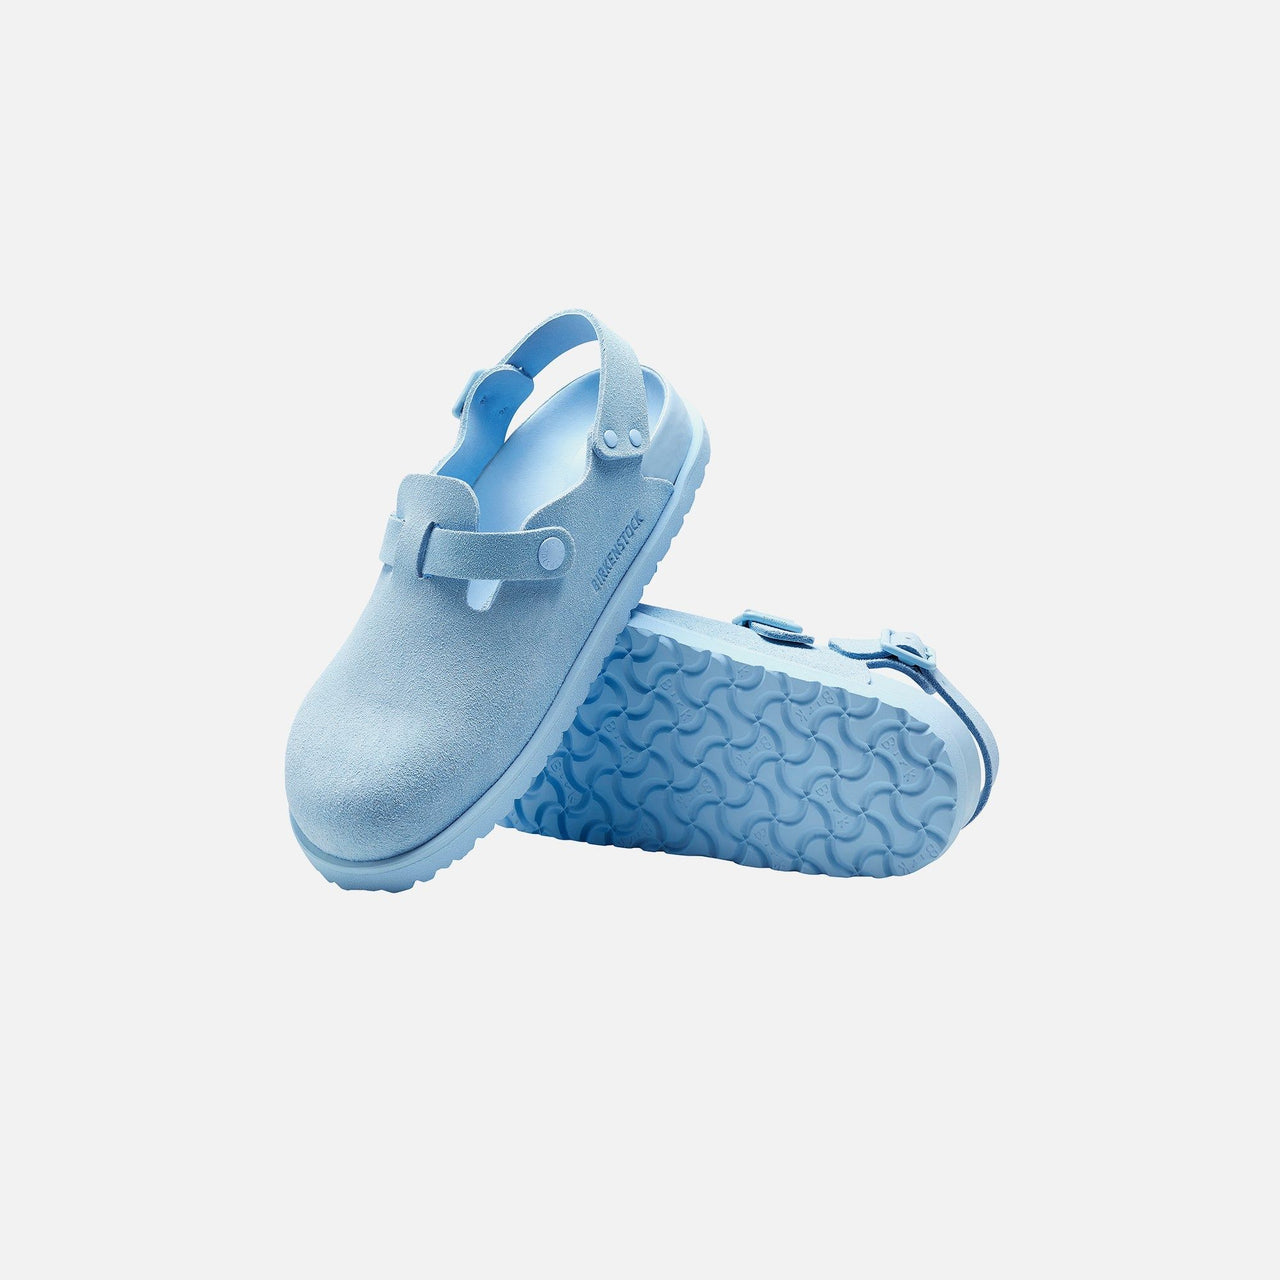 Pair of Birkenstock Tokio Suede Leather Powder Blue sandals on a wooden floor